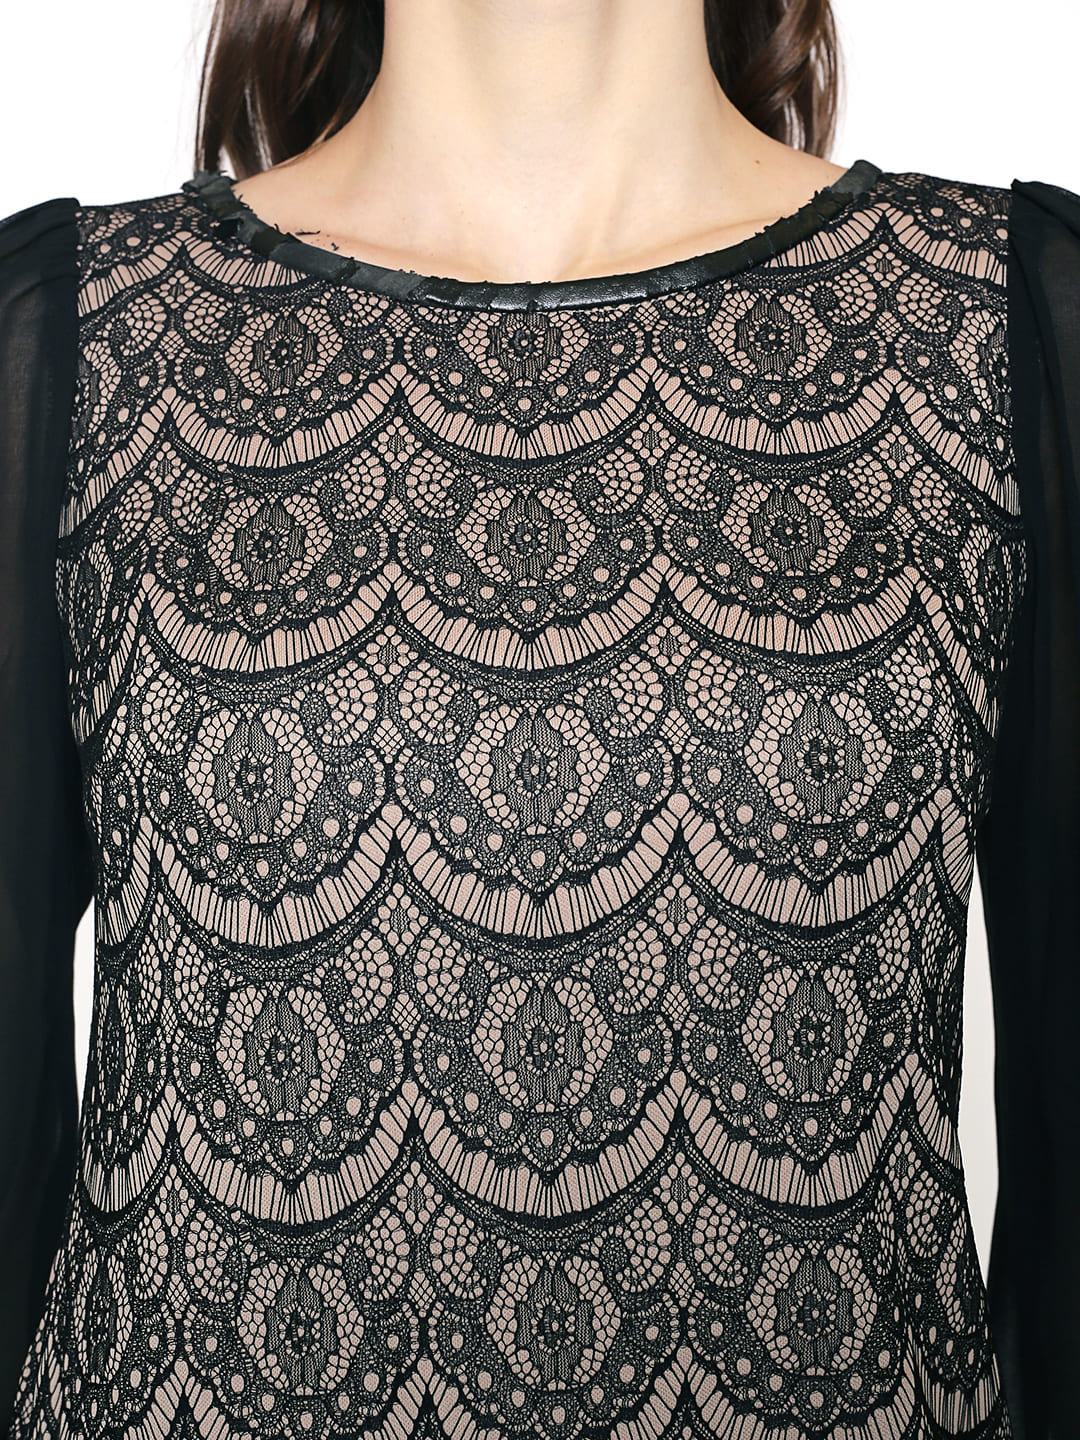 Women's Sheer Long-Sleeve Lace Sheath Dress